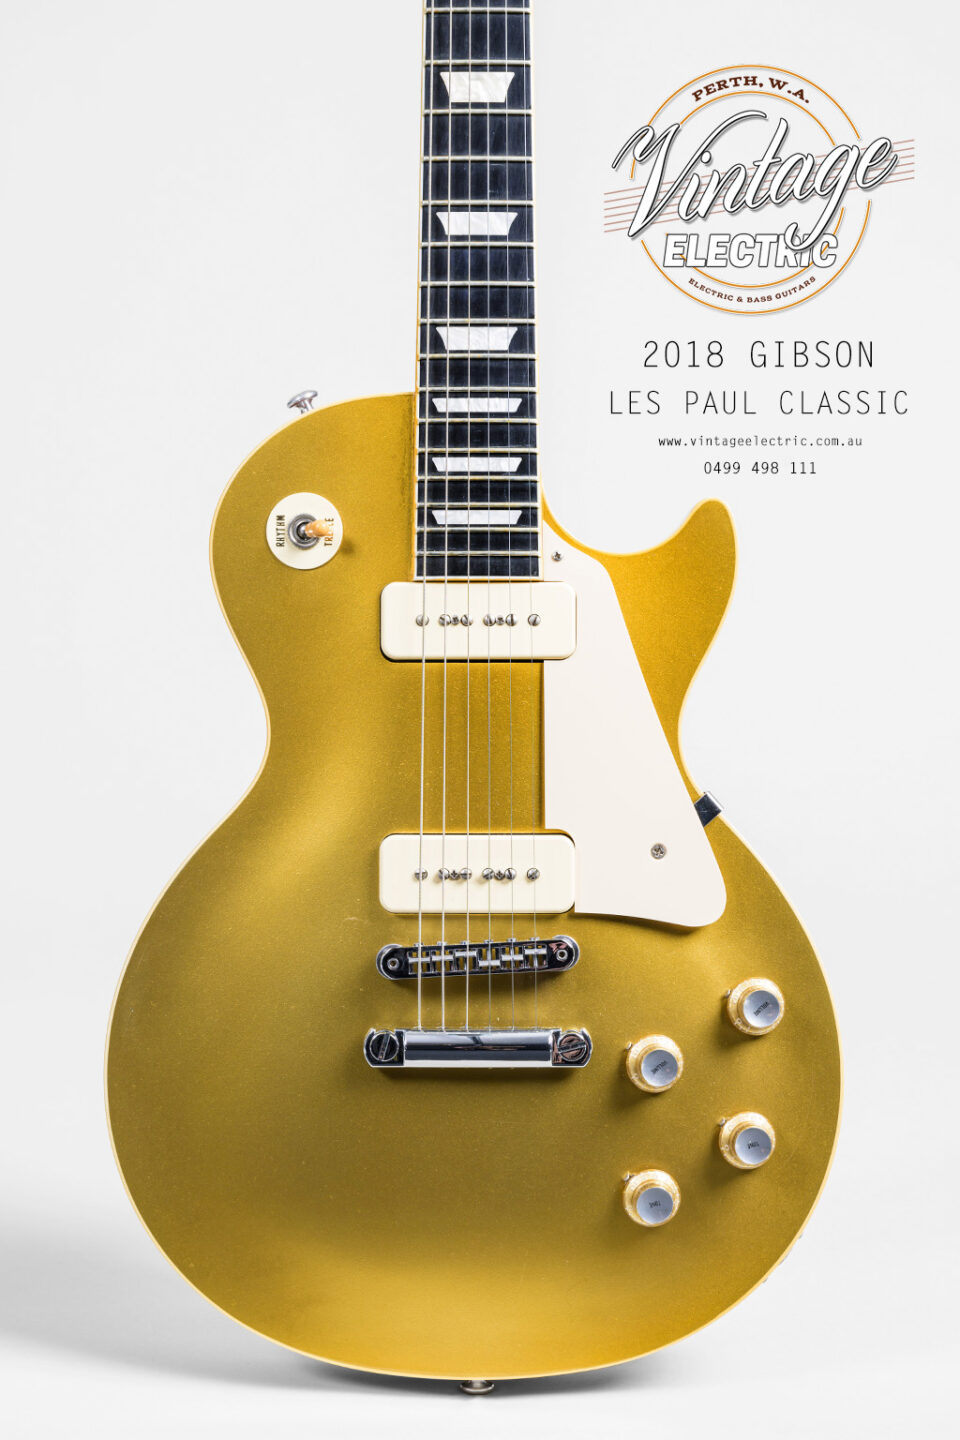 2018 Gibson Les Paul Classic Body